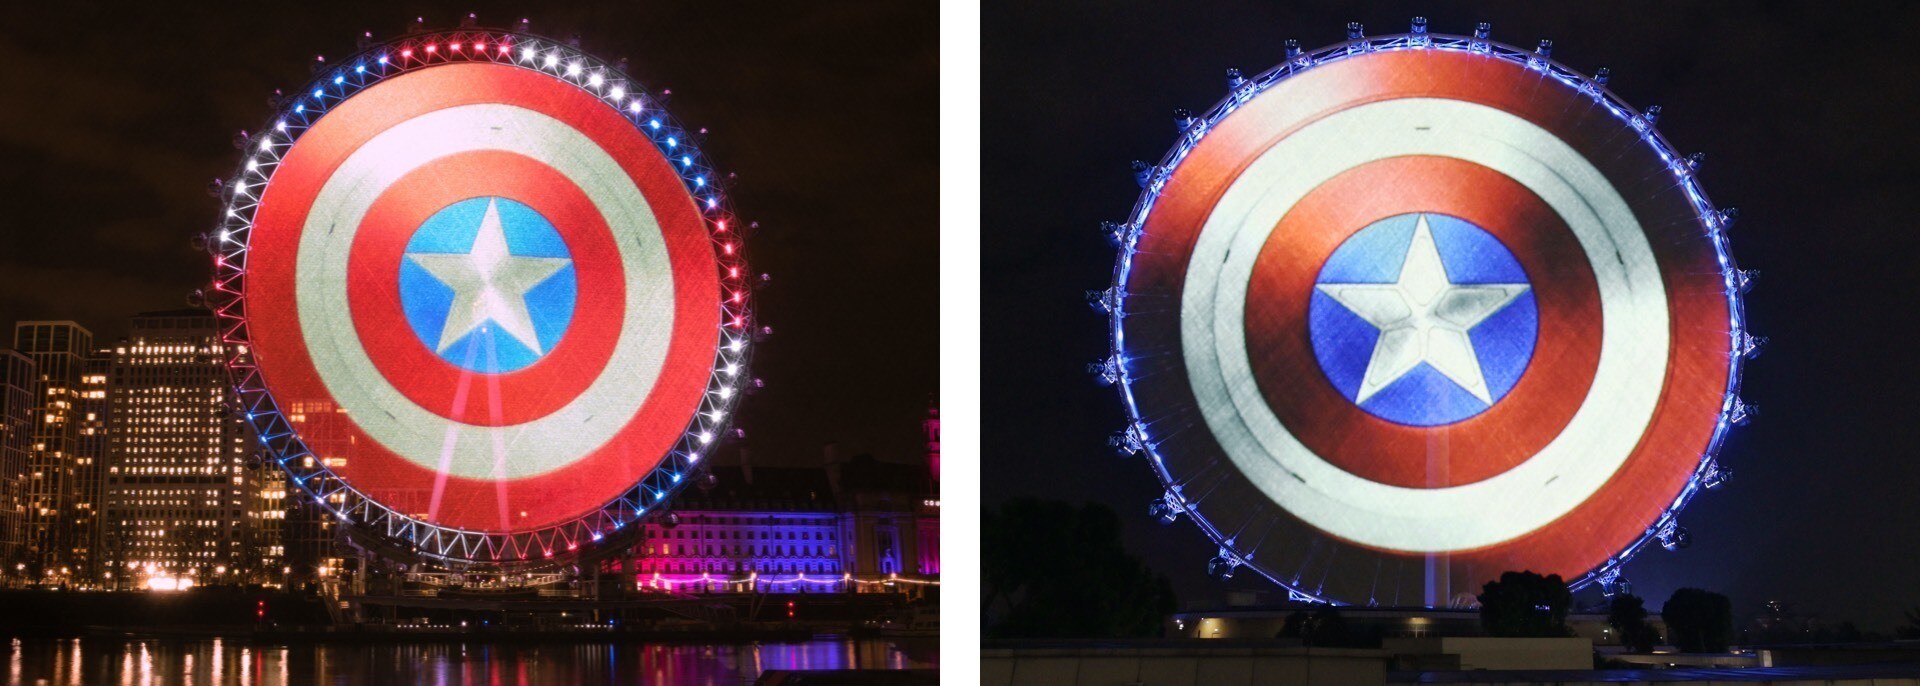 London Eye, Londres, Royaume-Uni et Singapore Flyer, Singapour